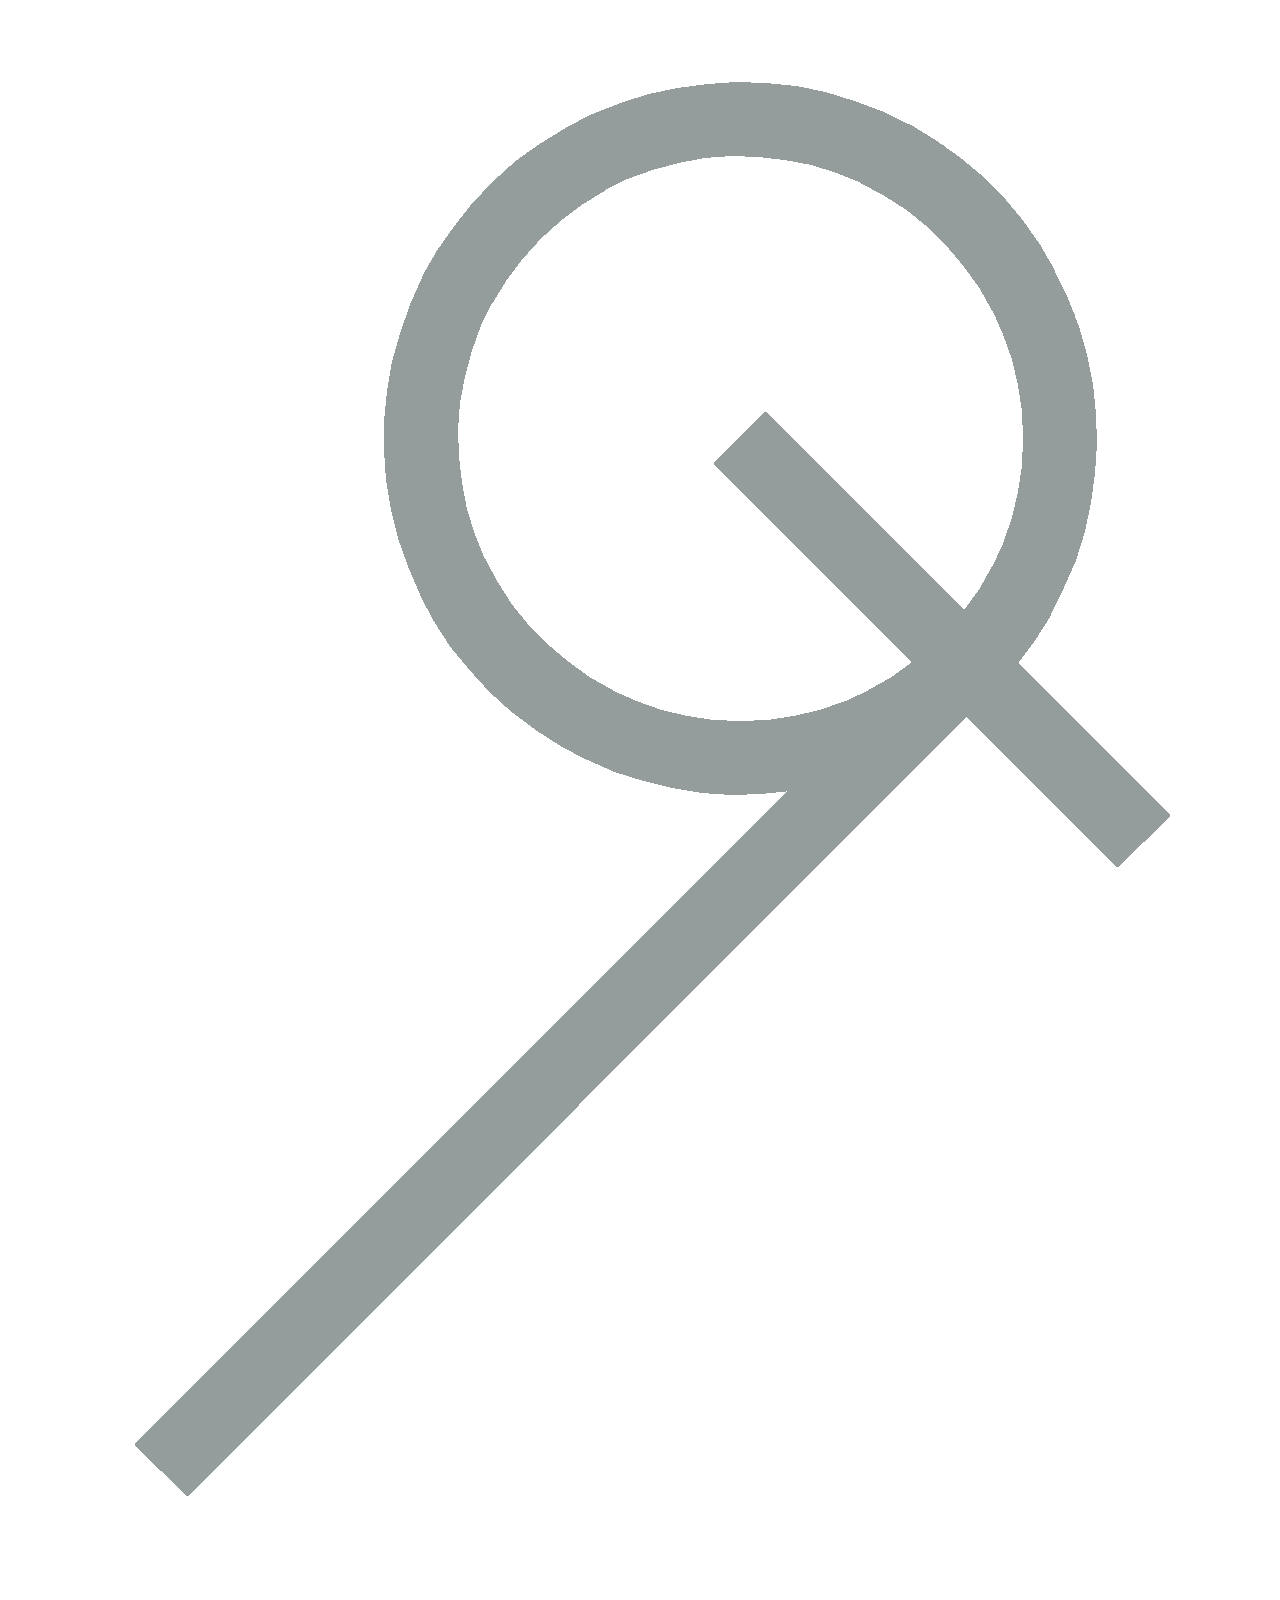 Q9 Logo - About